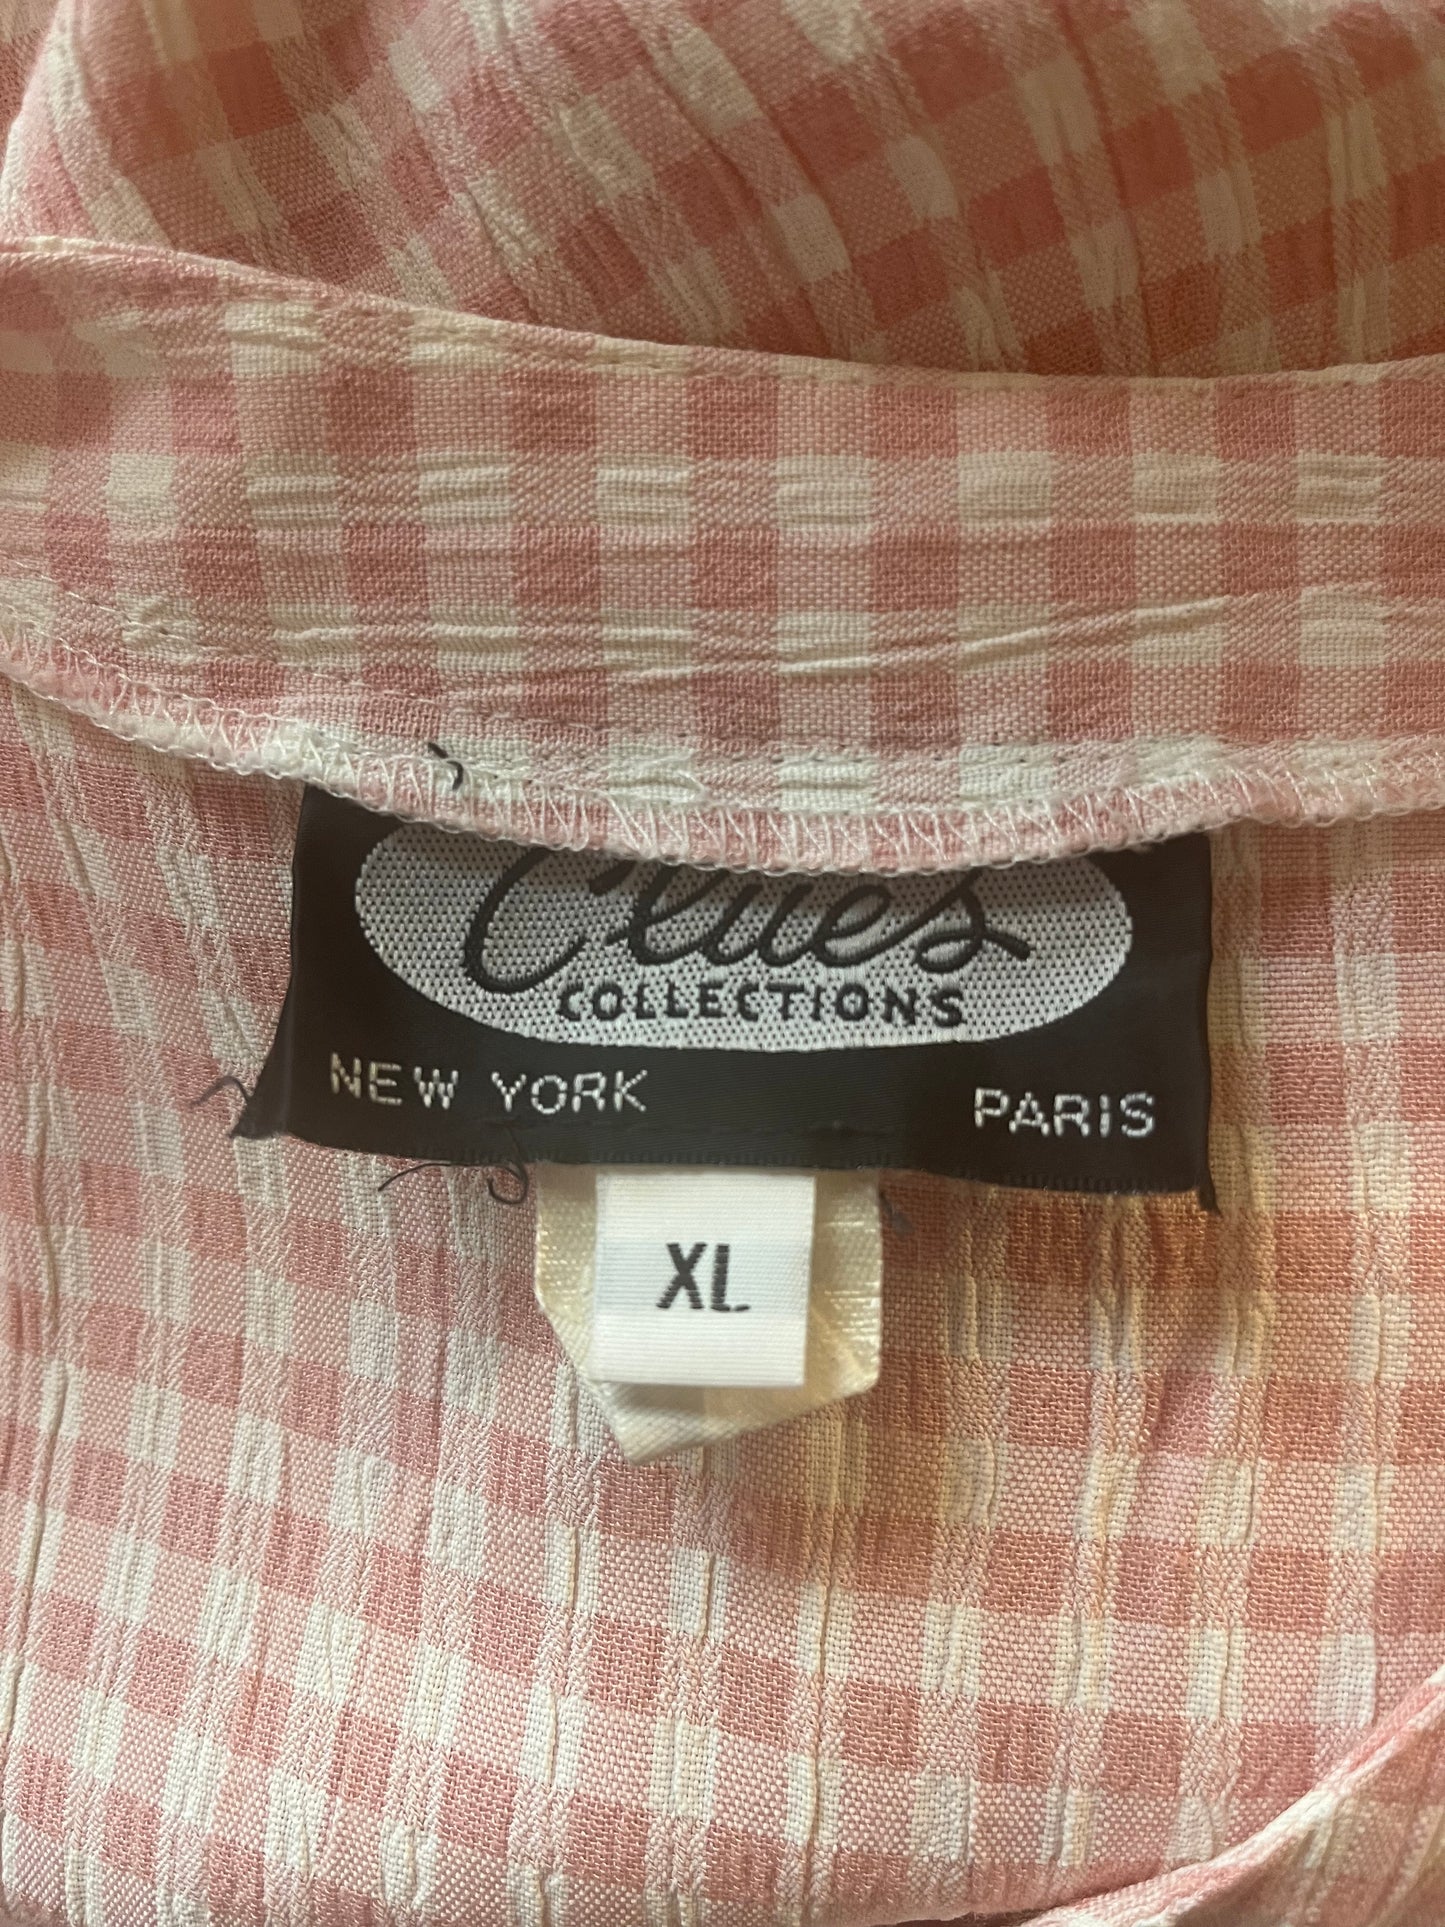 90s 'Clues' Pink Gingham Maxi Dress / XL